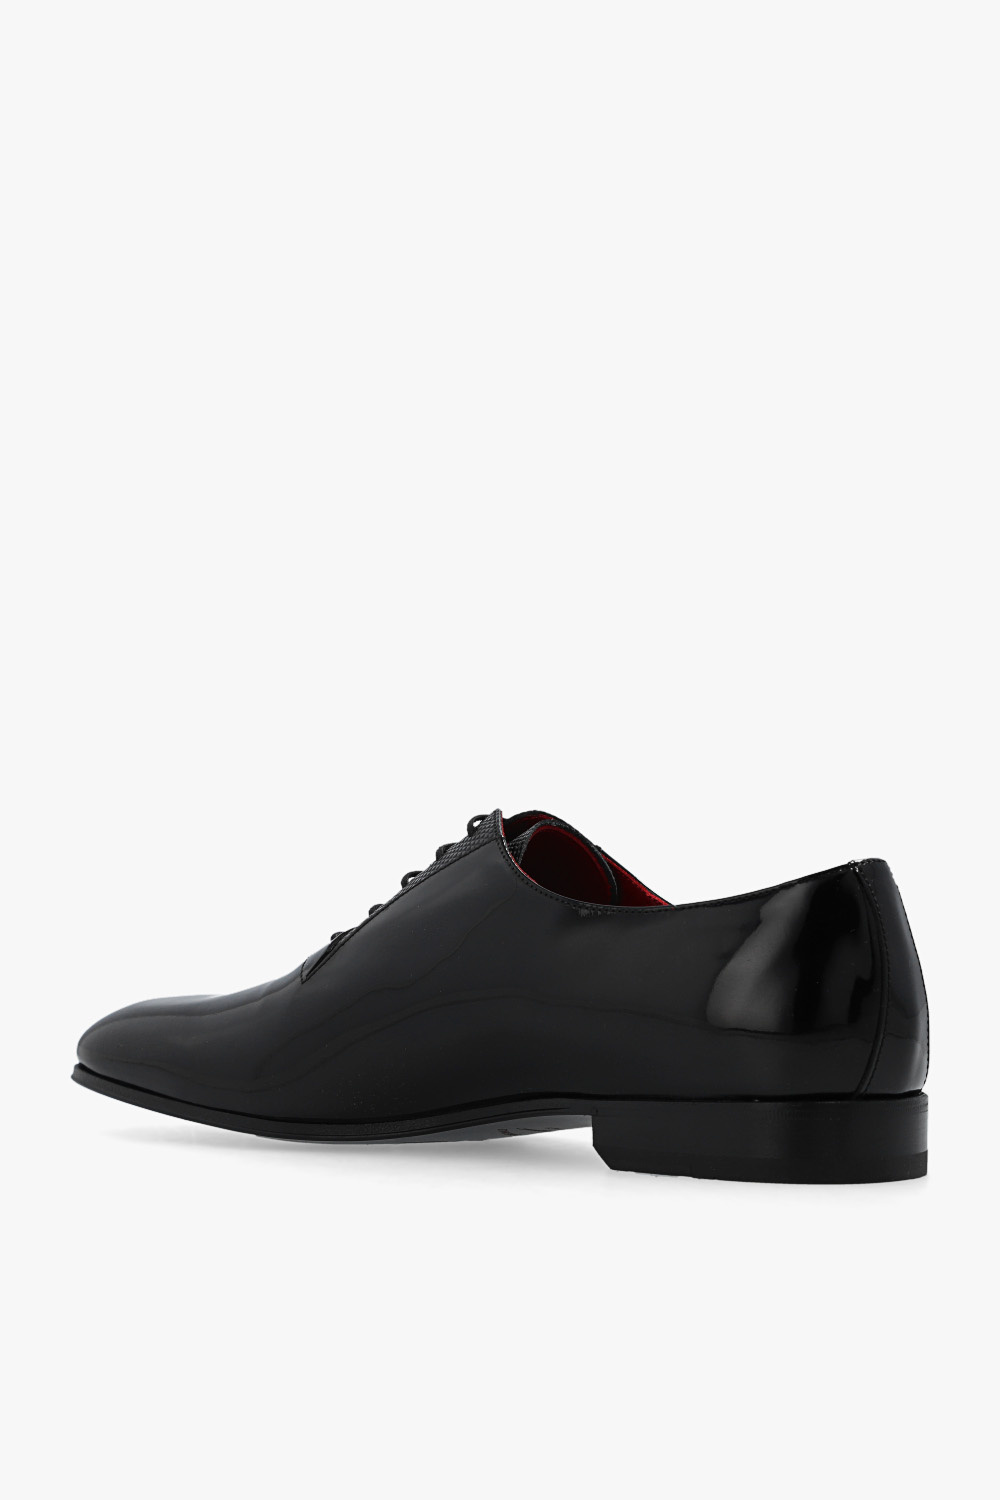 Salvatore Ferragamo ‘Gianbattis’ leather shoes